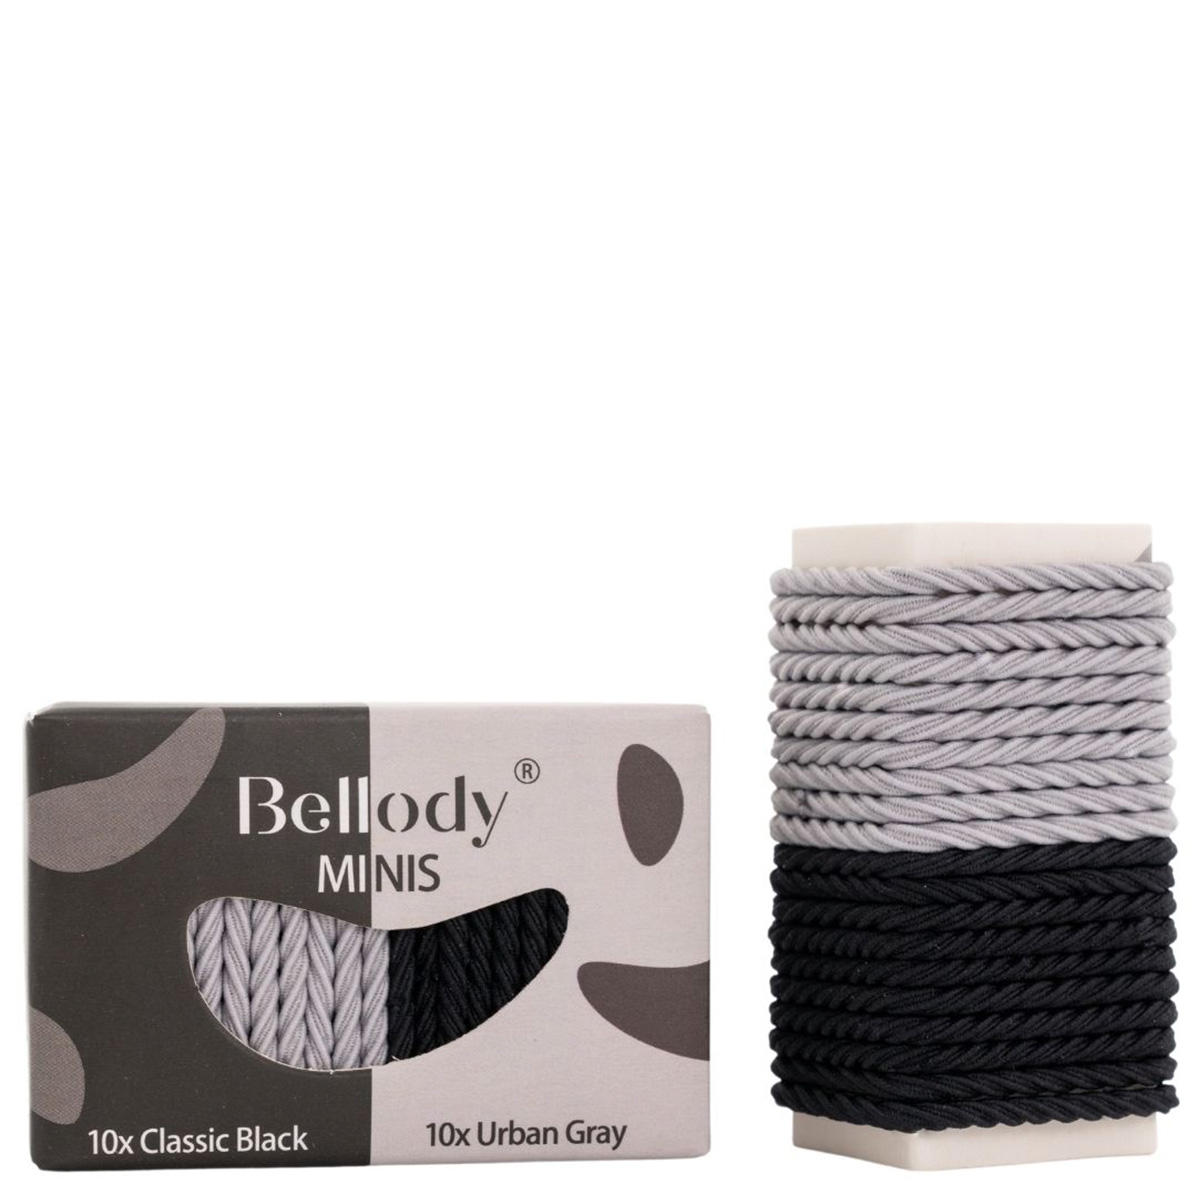 Bellody Minis hair ties Black/Gray 20 Stück - 1